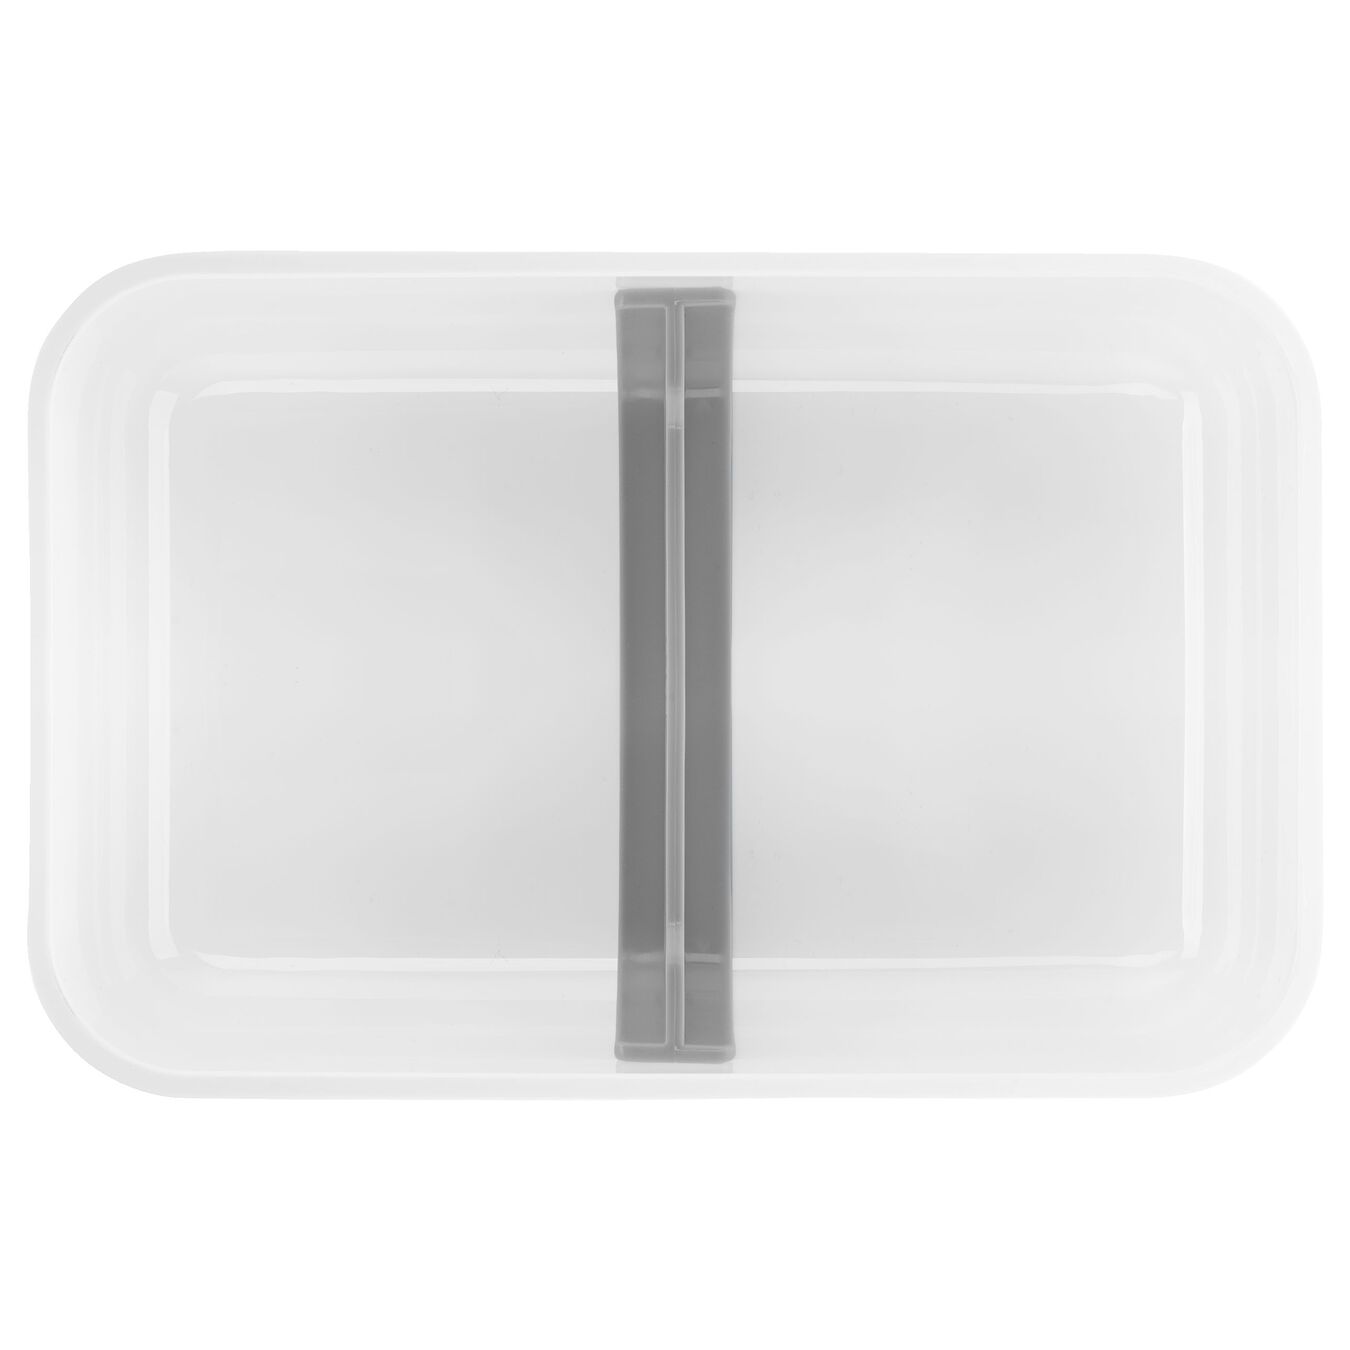 Vakuum Lunchbox L flach, Kunststoff, Weiß-grau,,large 4